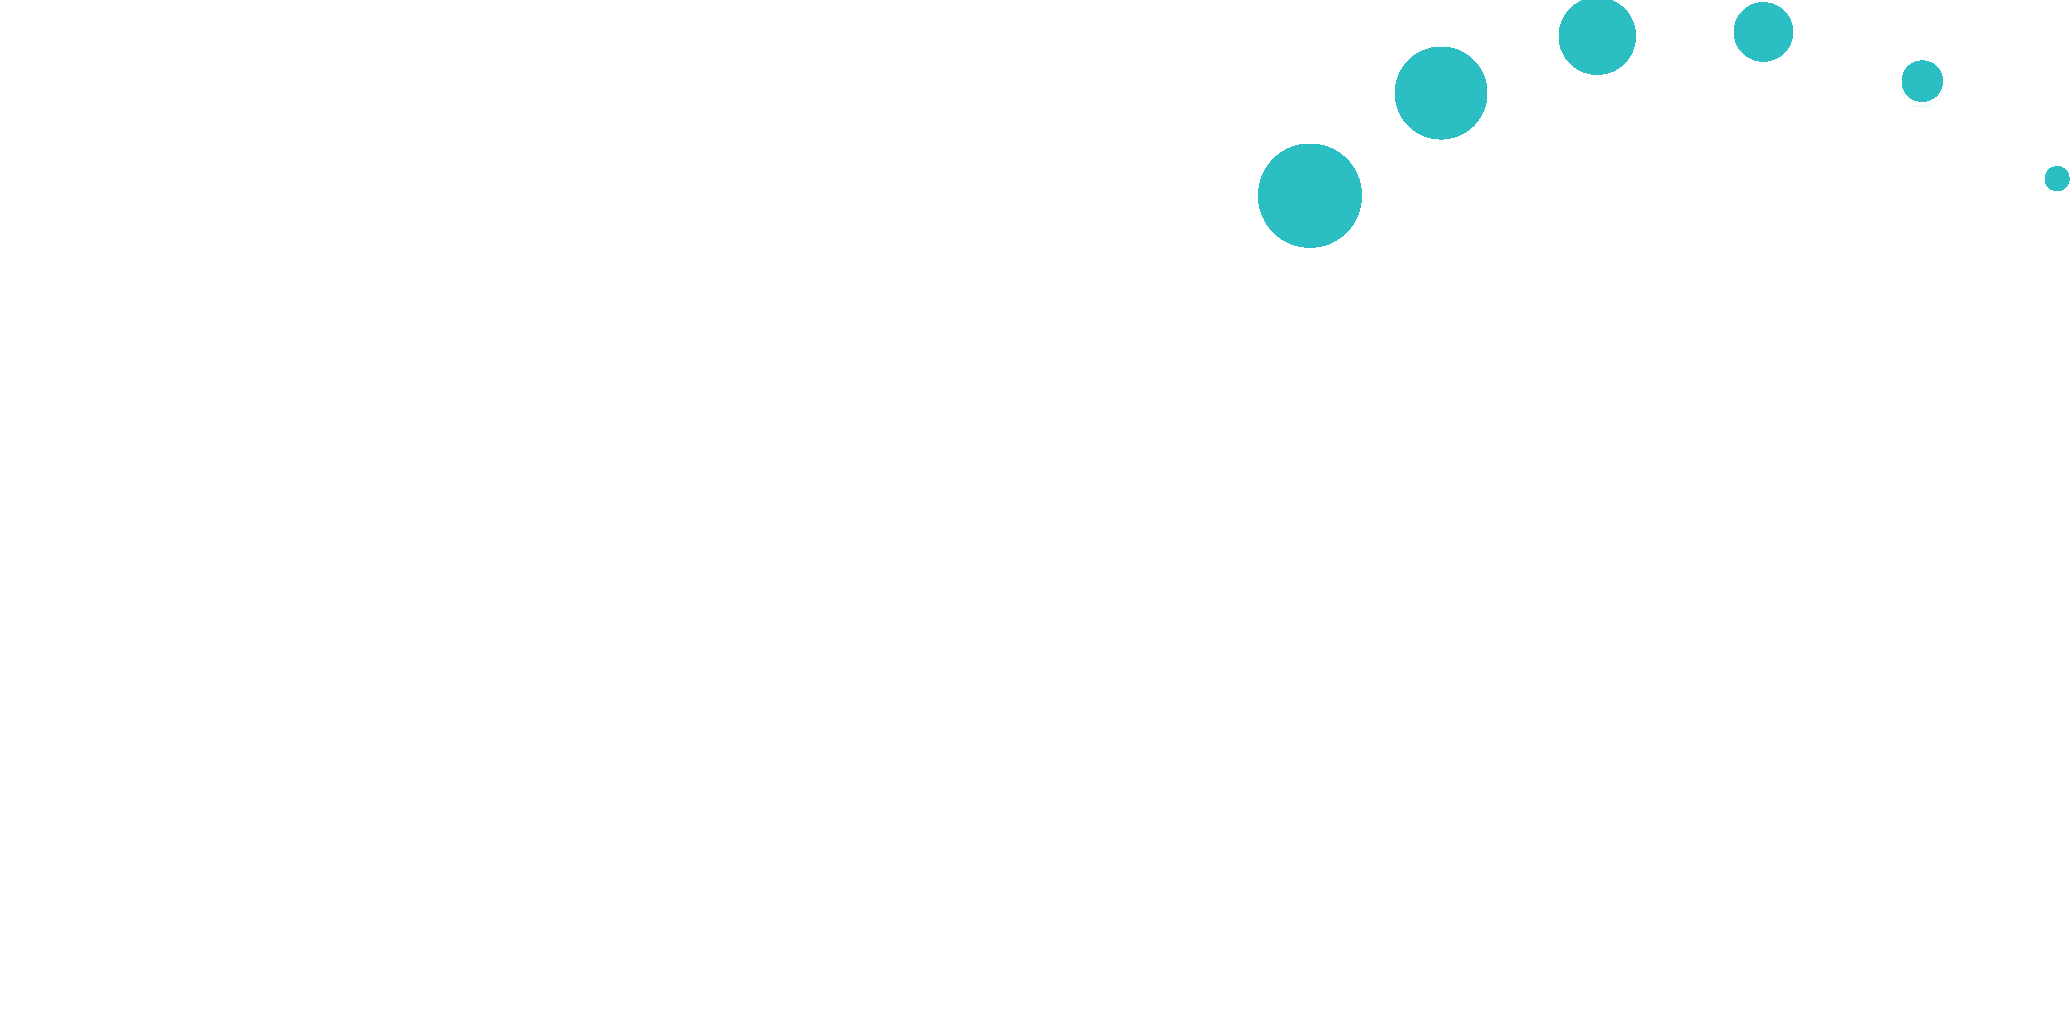 Portside Real Estate Group company logo